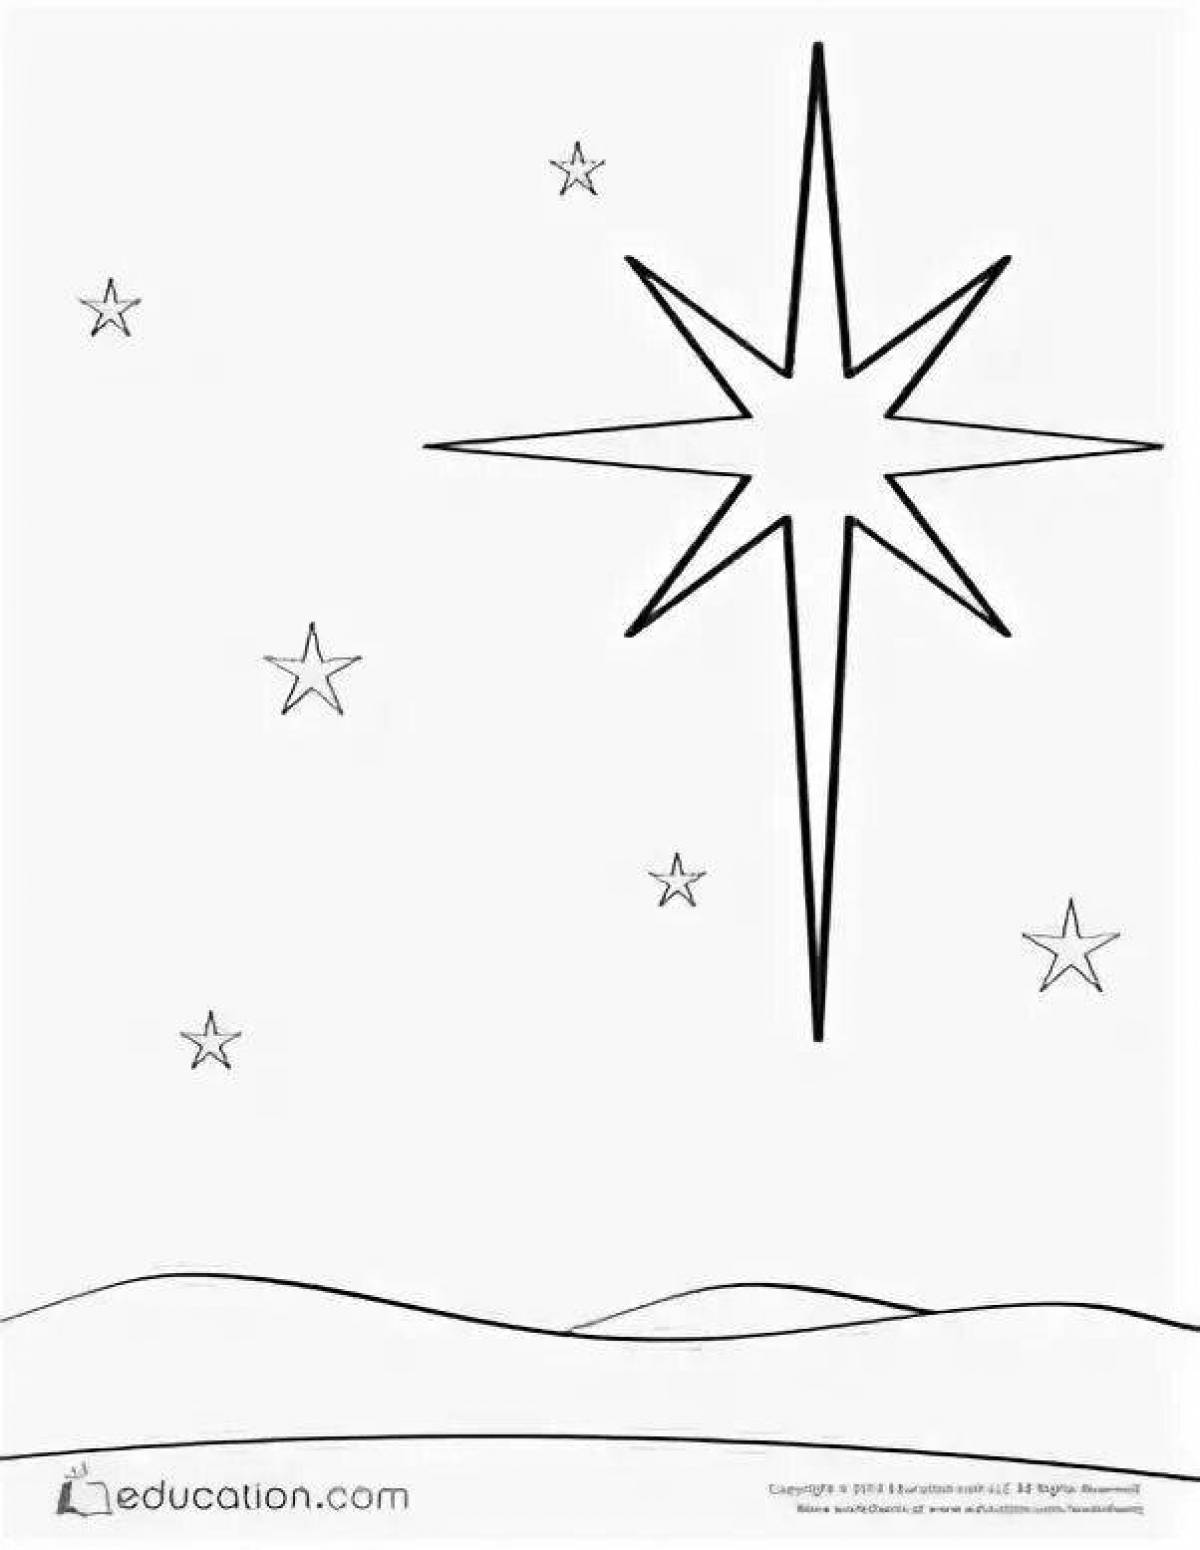 Star of Bethlehem sky coloring book